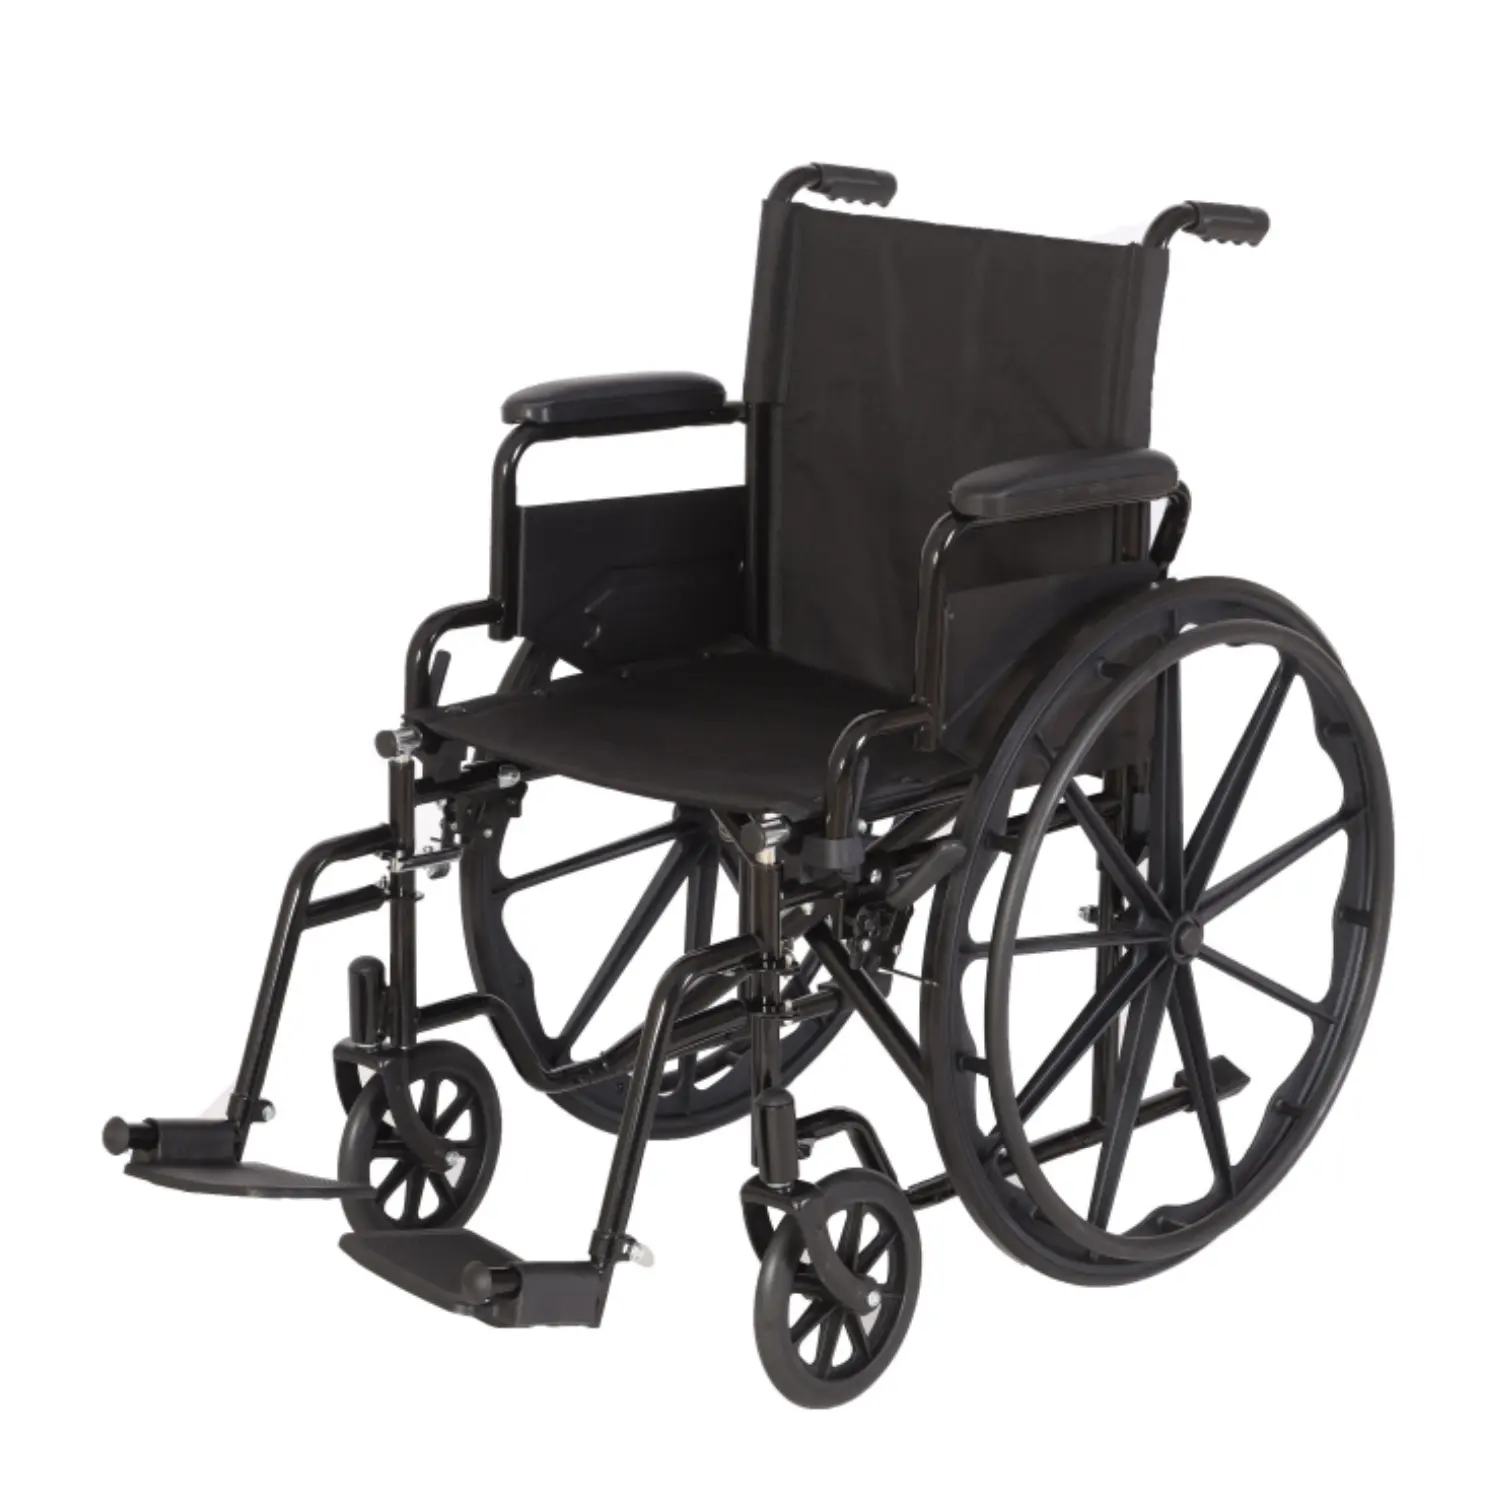 WellGo Sillas de ruedas plegables ultraligeras para discapacitados sillas ruedas ligeras para ancianos